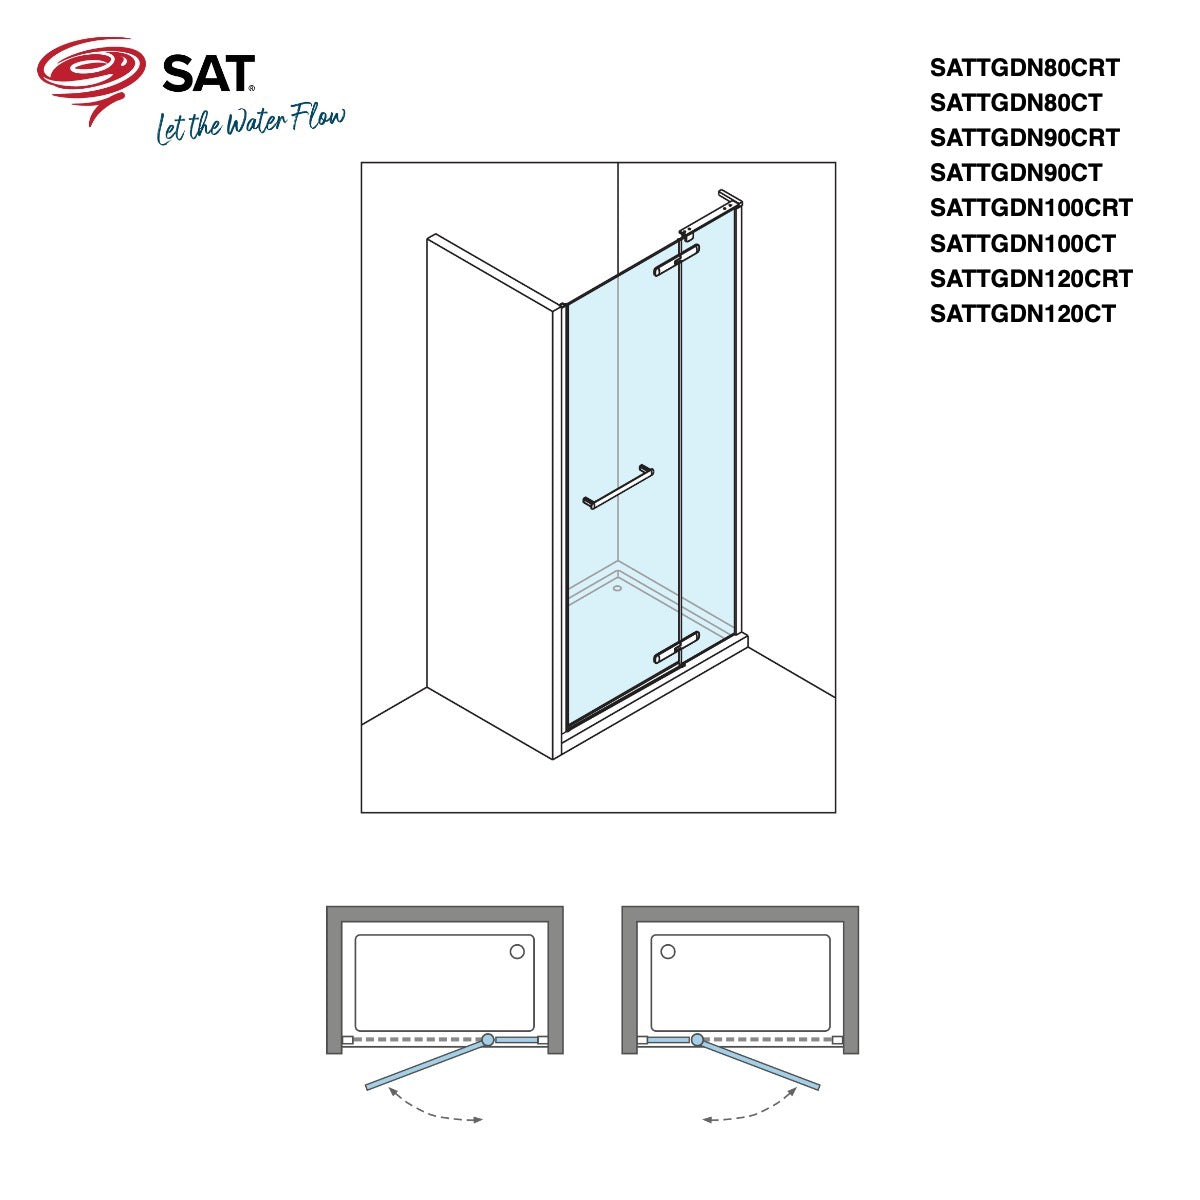 SATTGDN120CRT SAT TGD NEW 120 cm tuš vrata brez okvirja